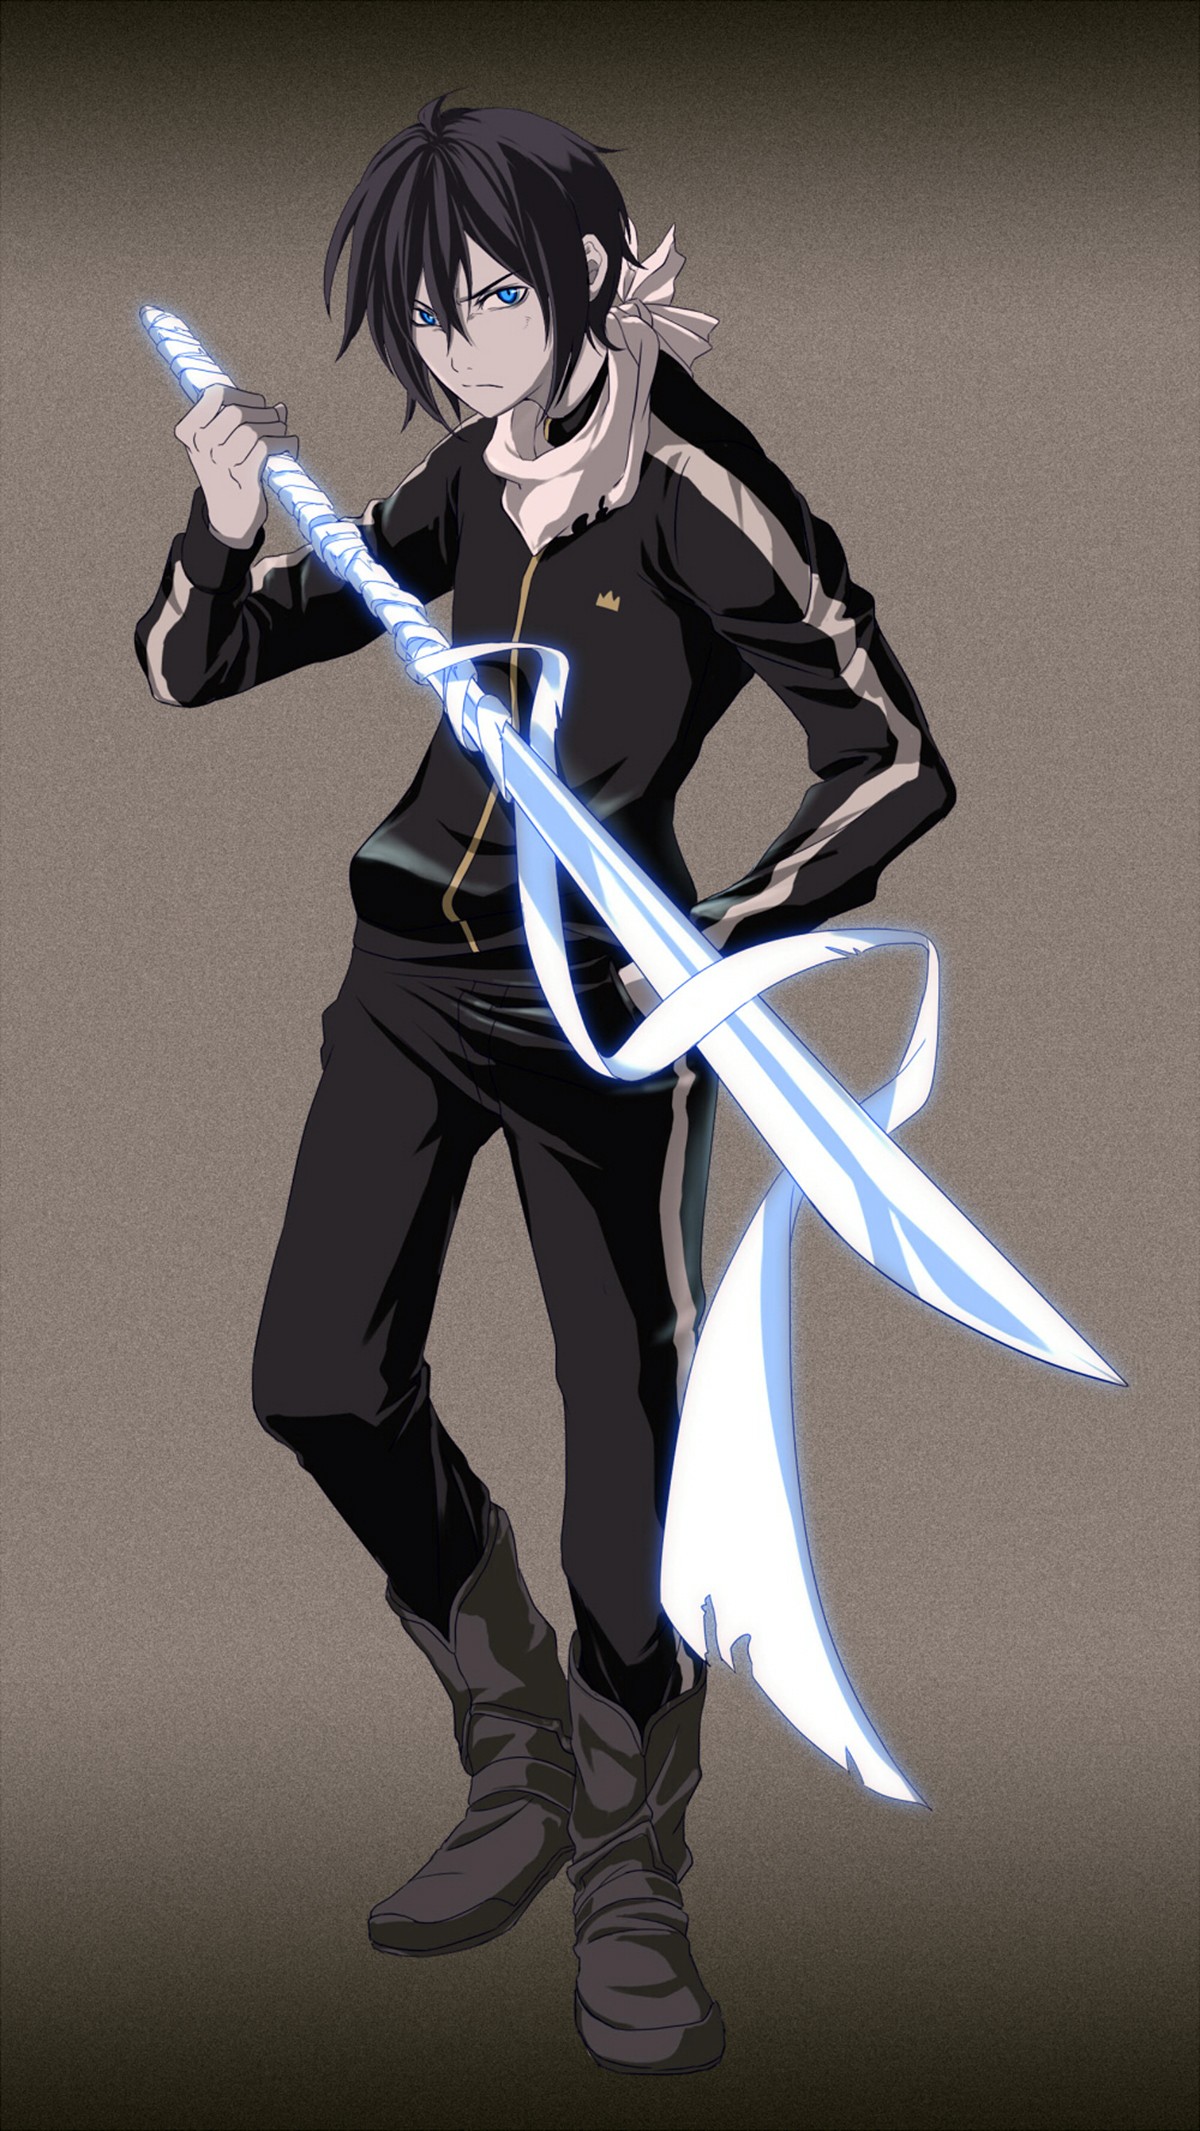 Anime Boy With Sword - HD Wallpaper 